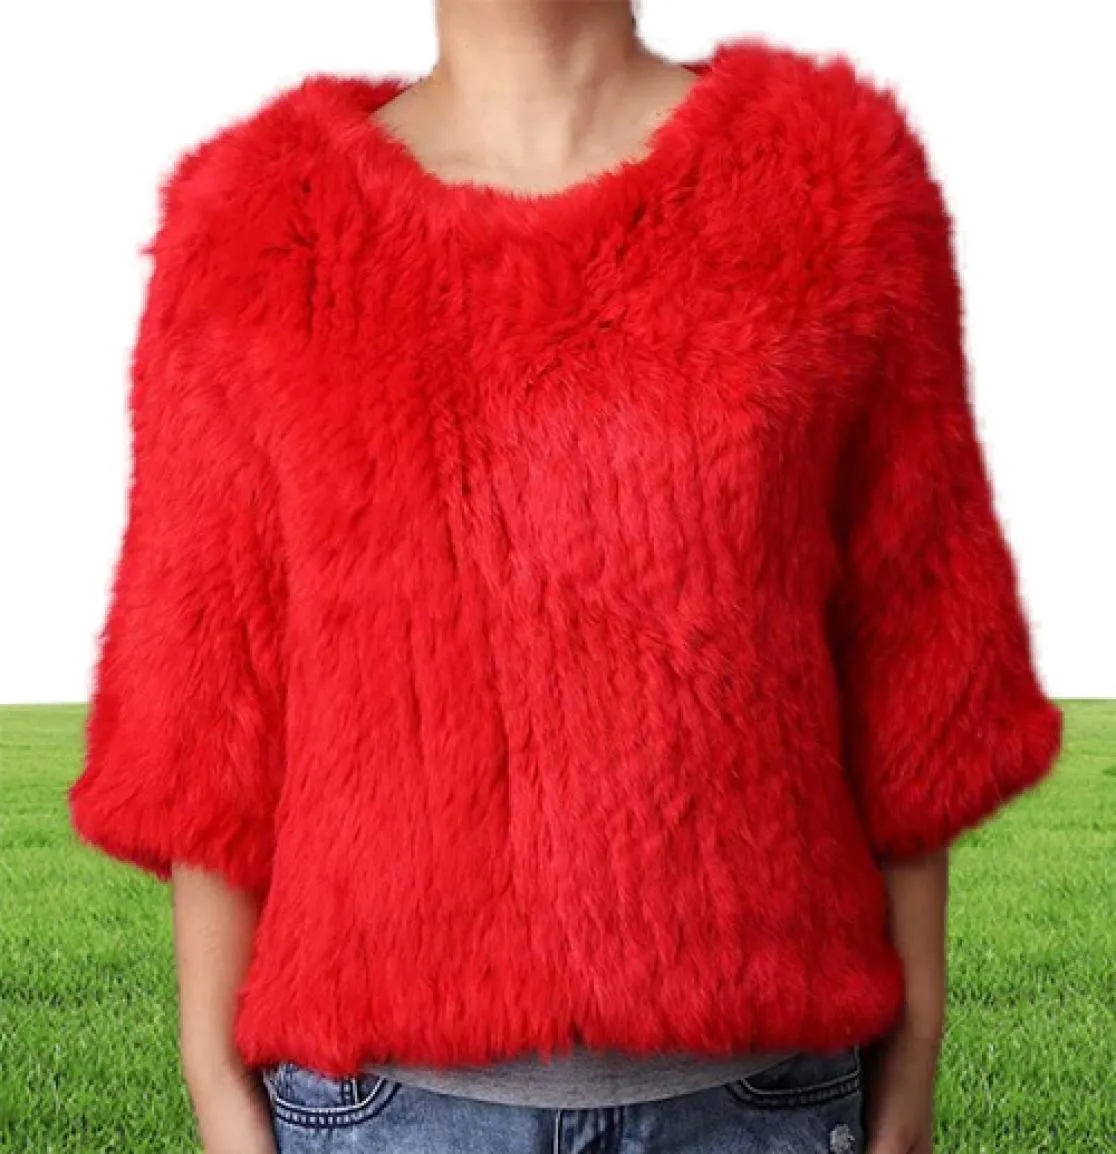 FXFURS Knitted Rabbit Fur Poncho Women Fashion Fur Sweater 100 Real Fur Jackets Girl039s Pullover CJ1912132301191